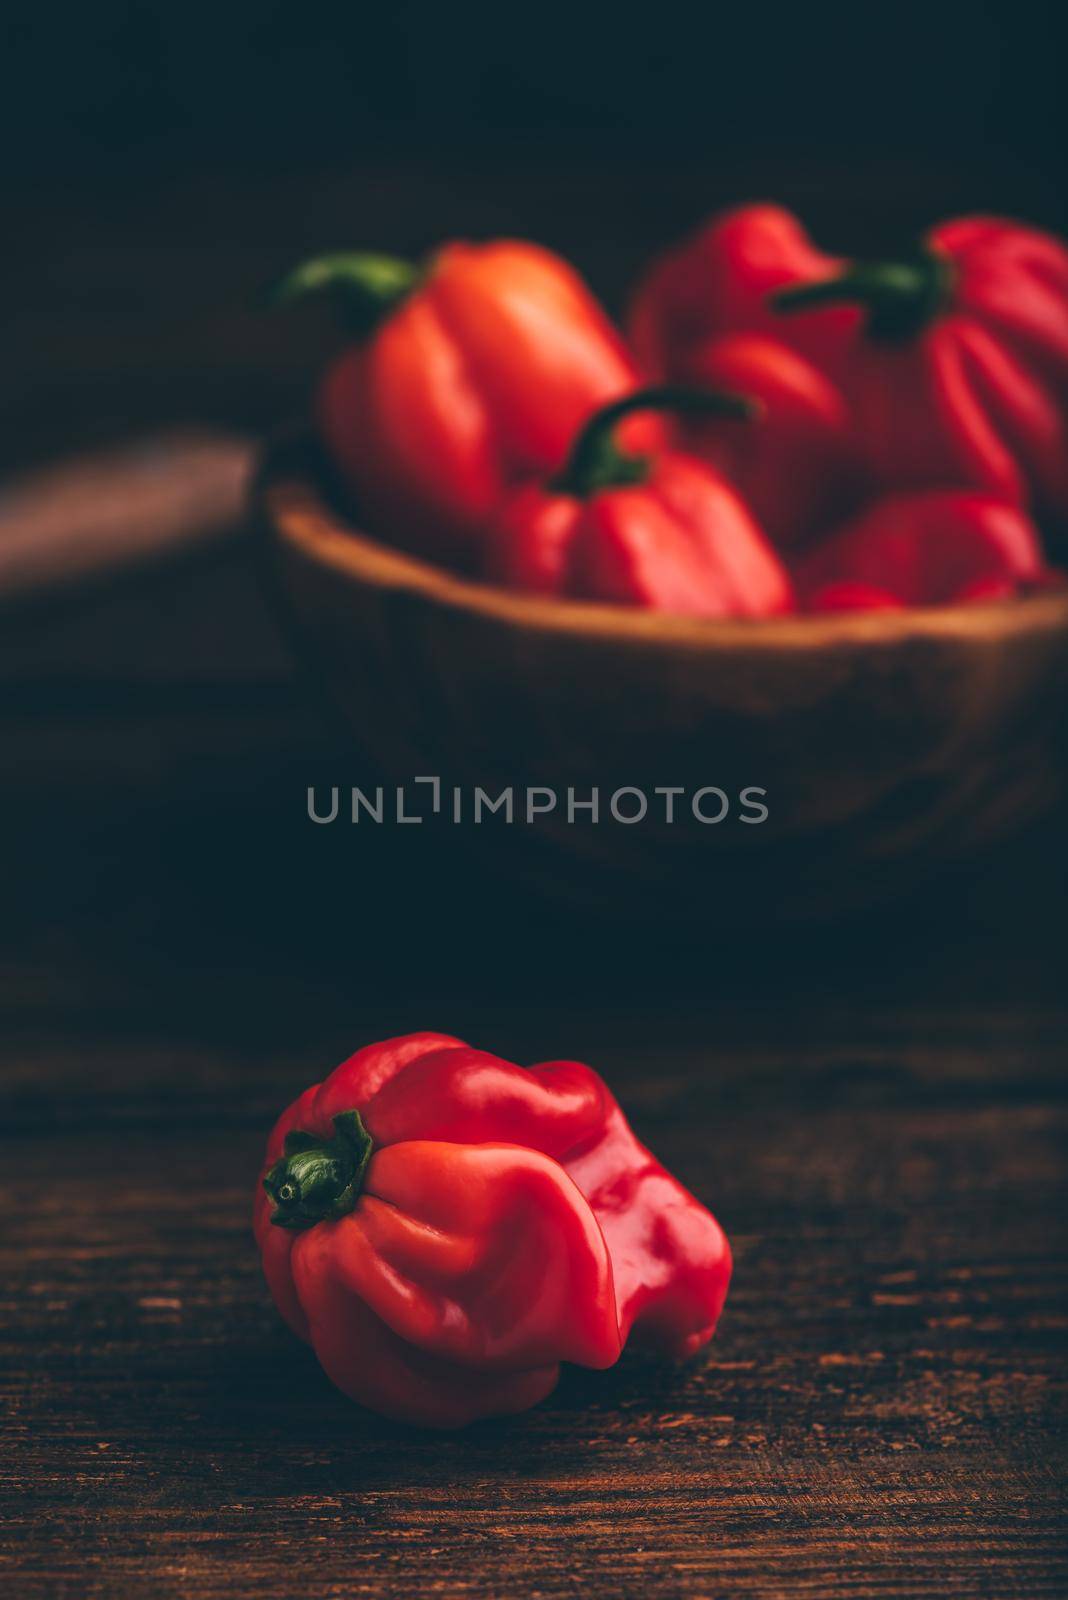 Red Habanero Chili Pepper by Seva_blsv